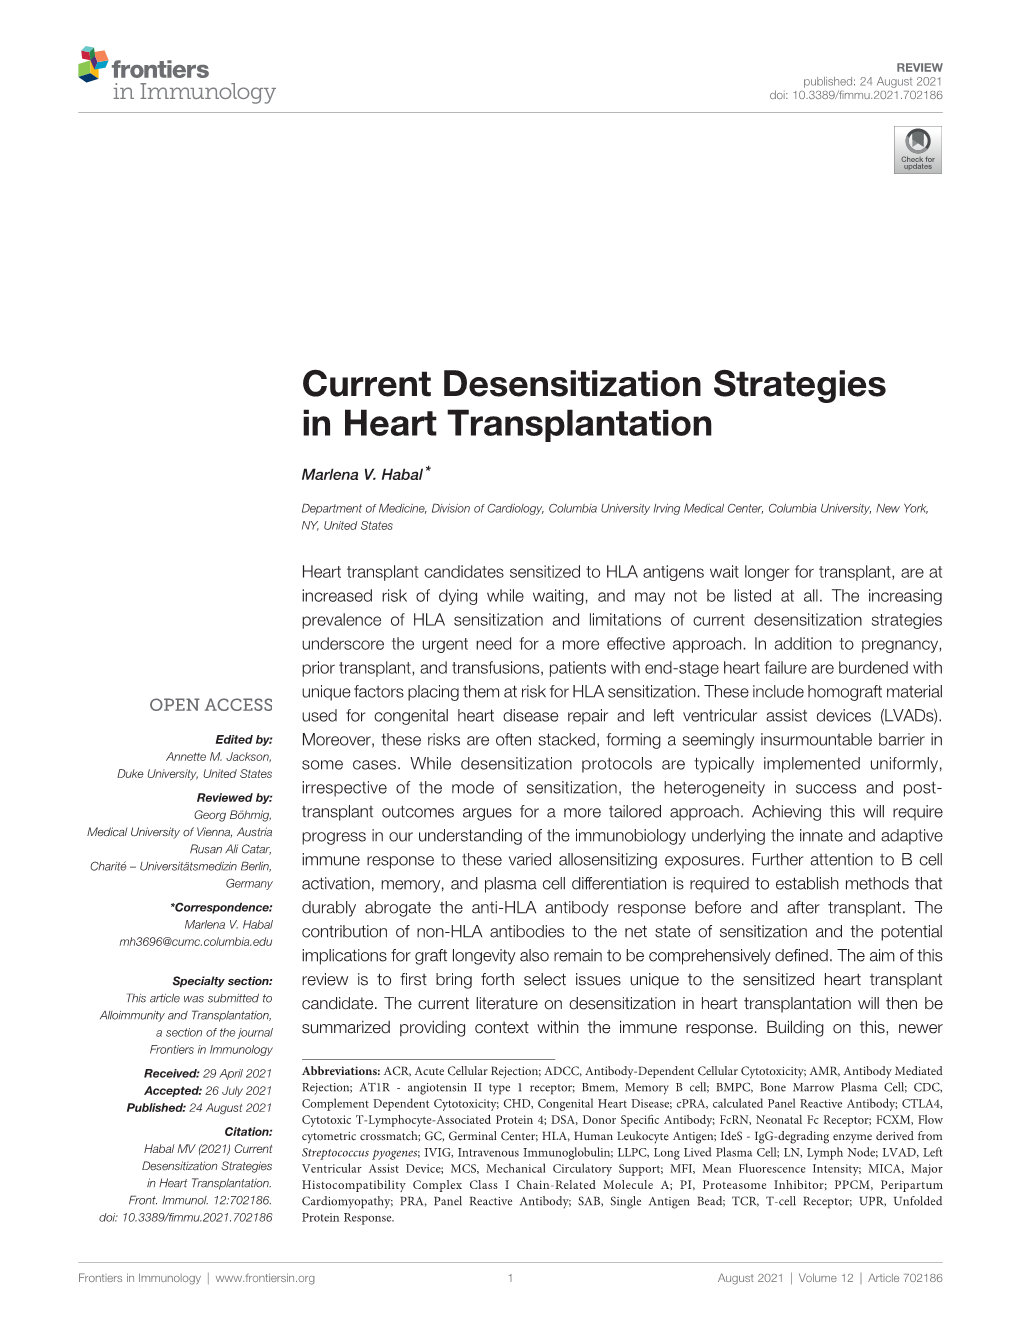 Current Desensitization Strategies in Heart Transplantation